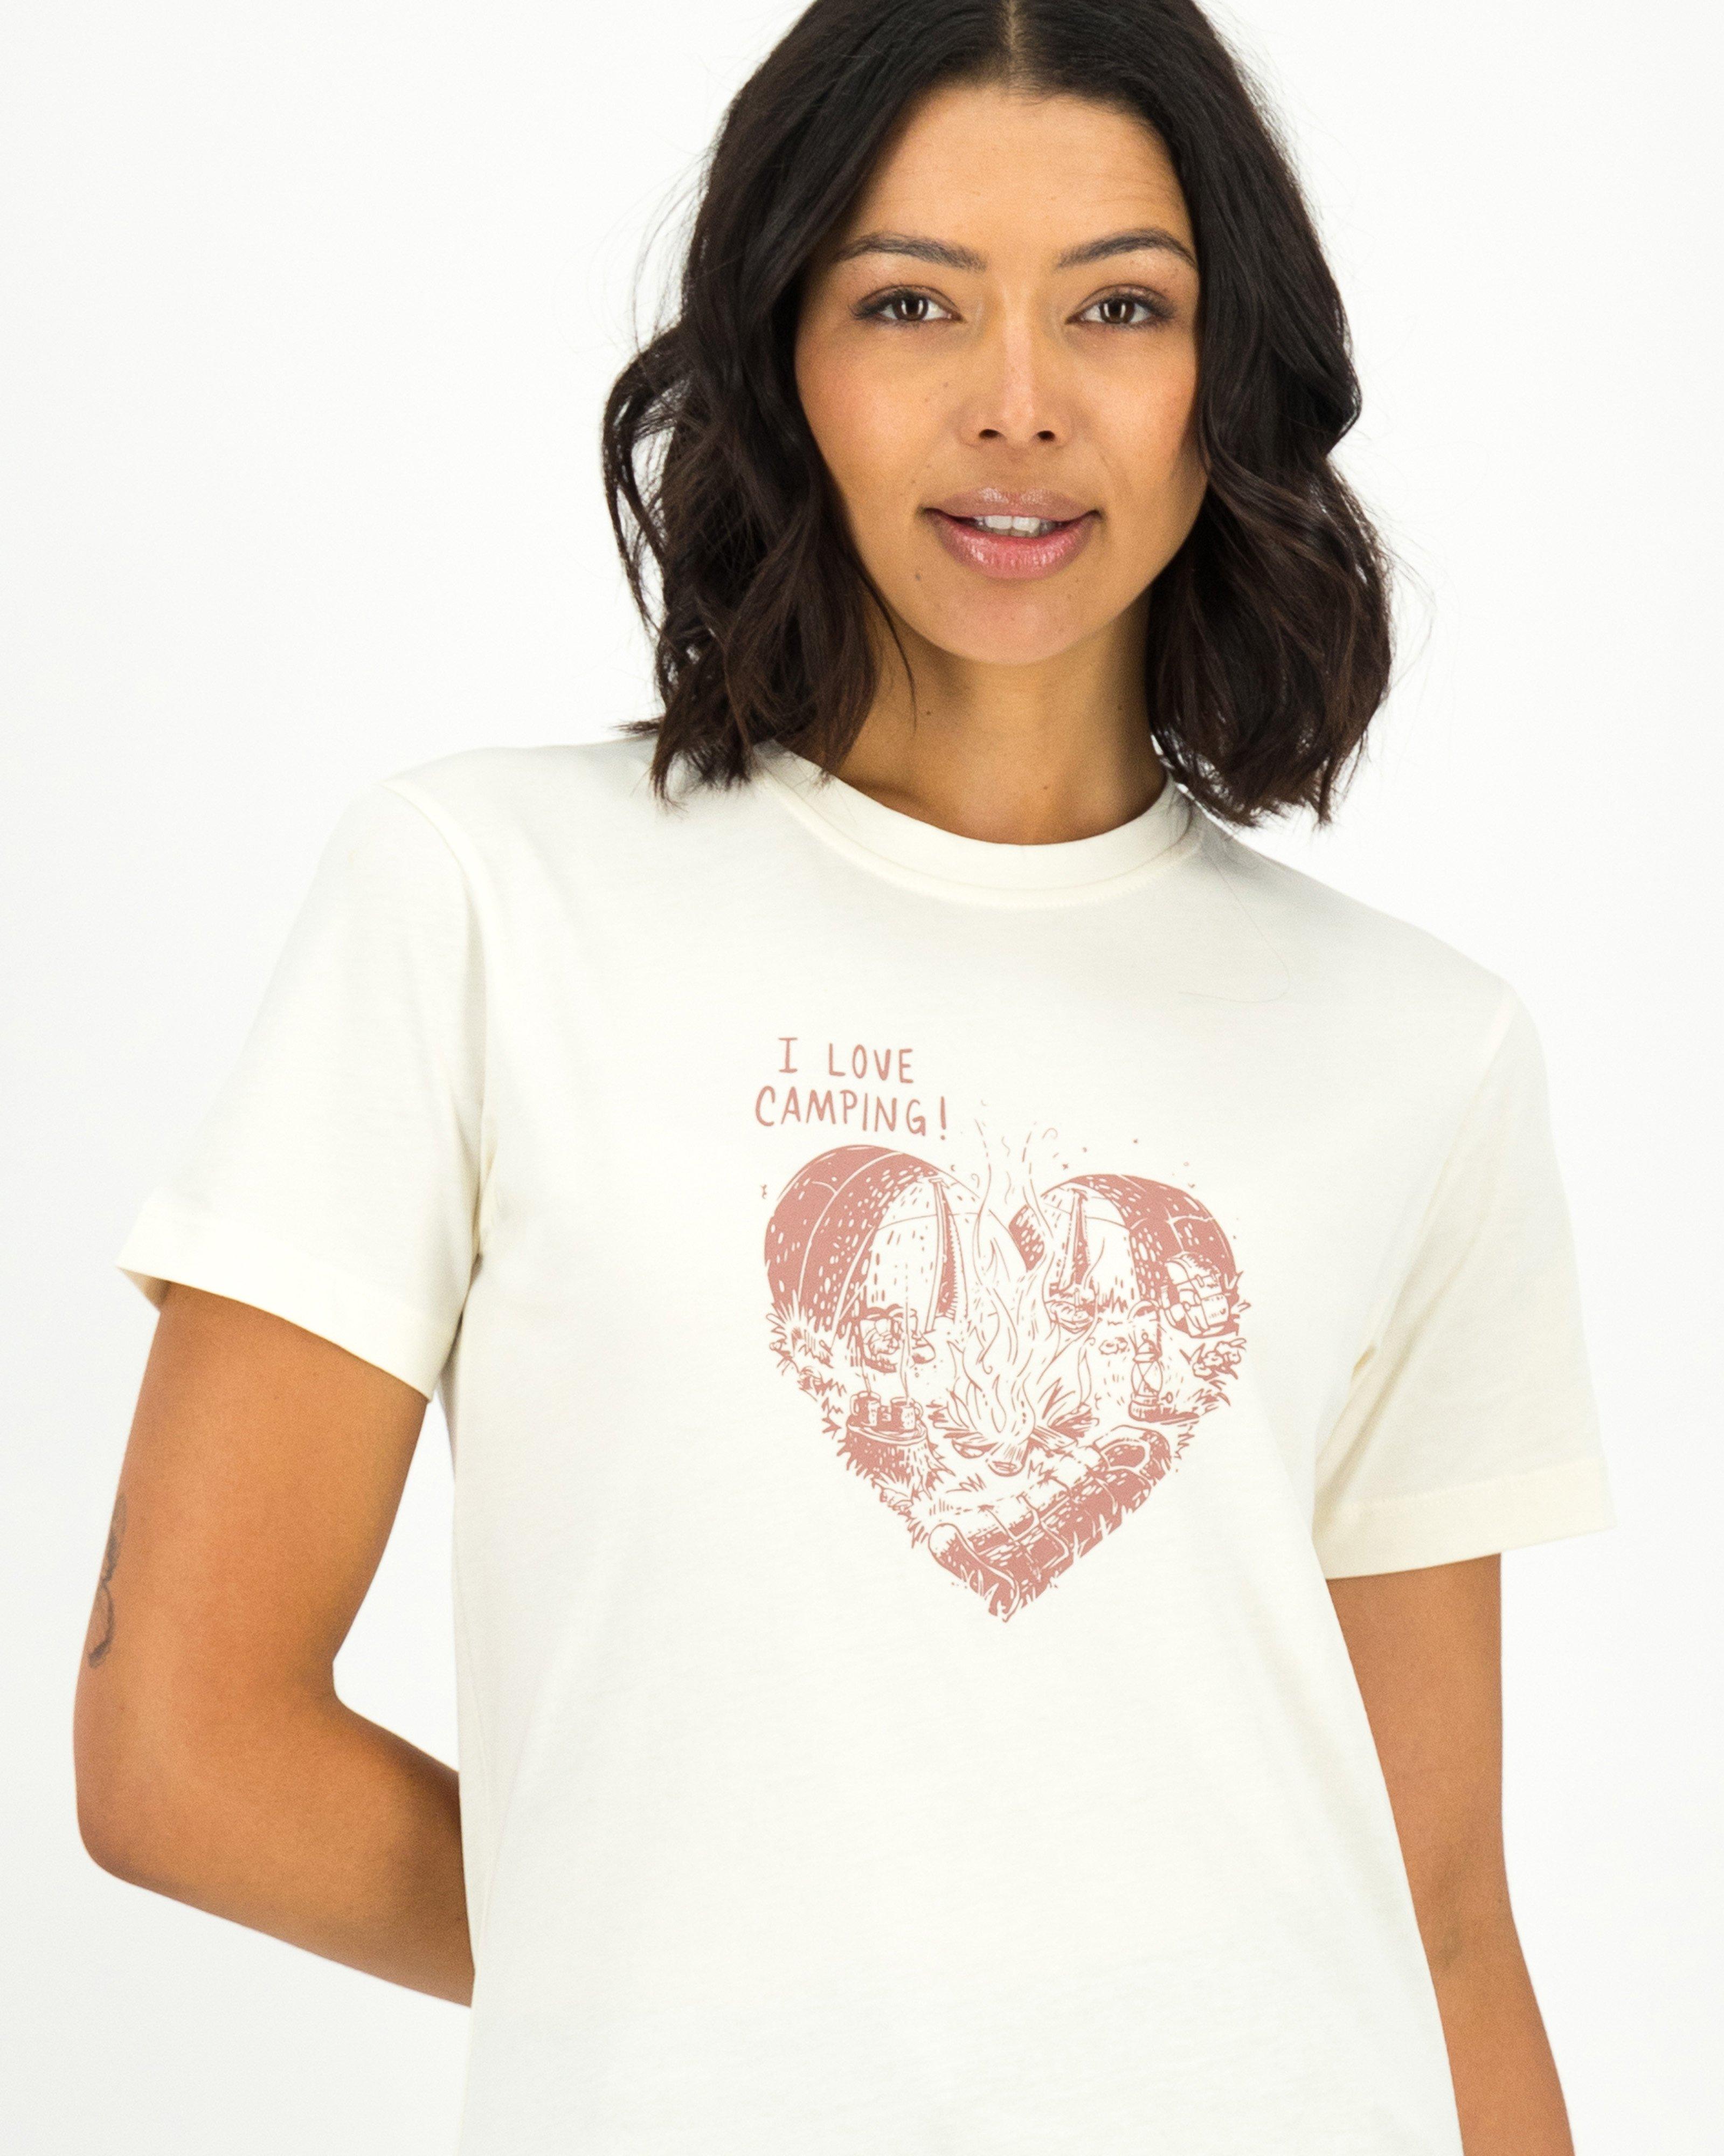 Jack Wolfskin Women’s Camping Love Slim Fit Cotton T-shirt | Cape Union ...